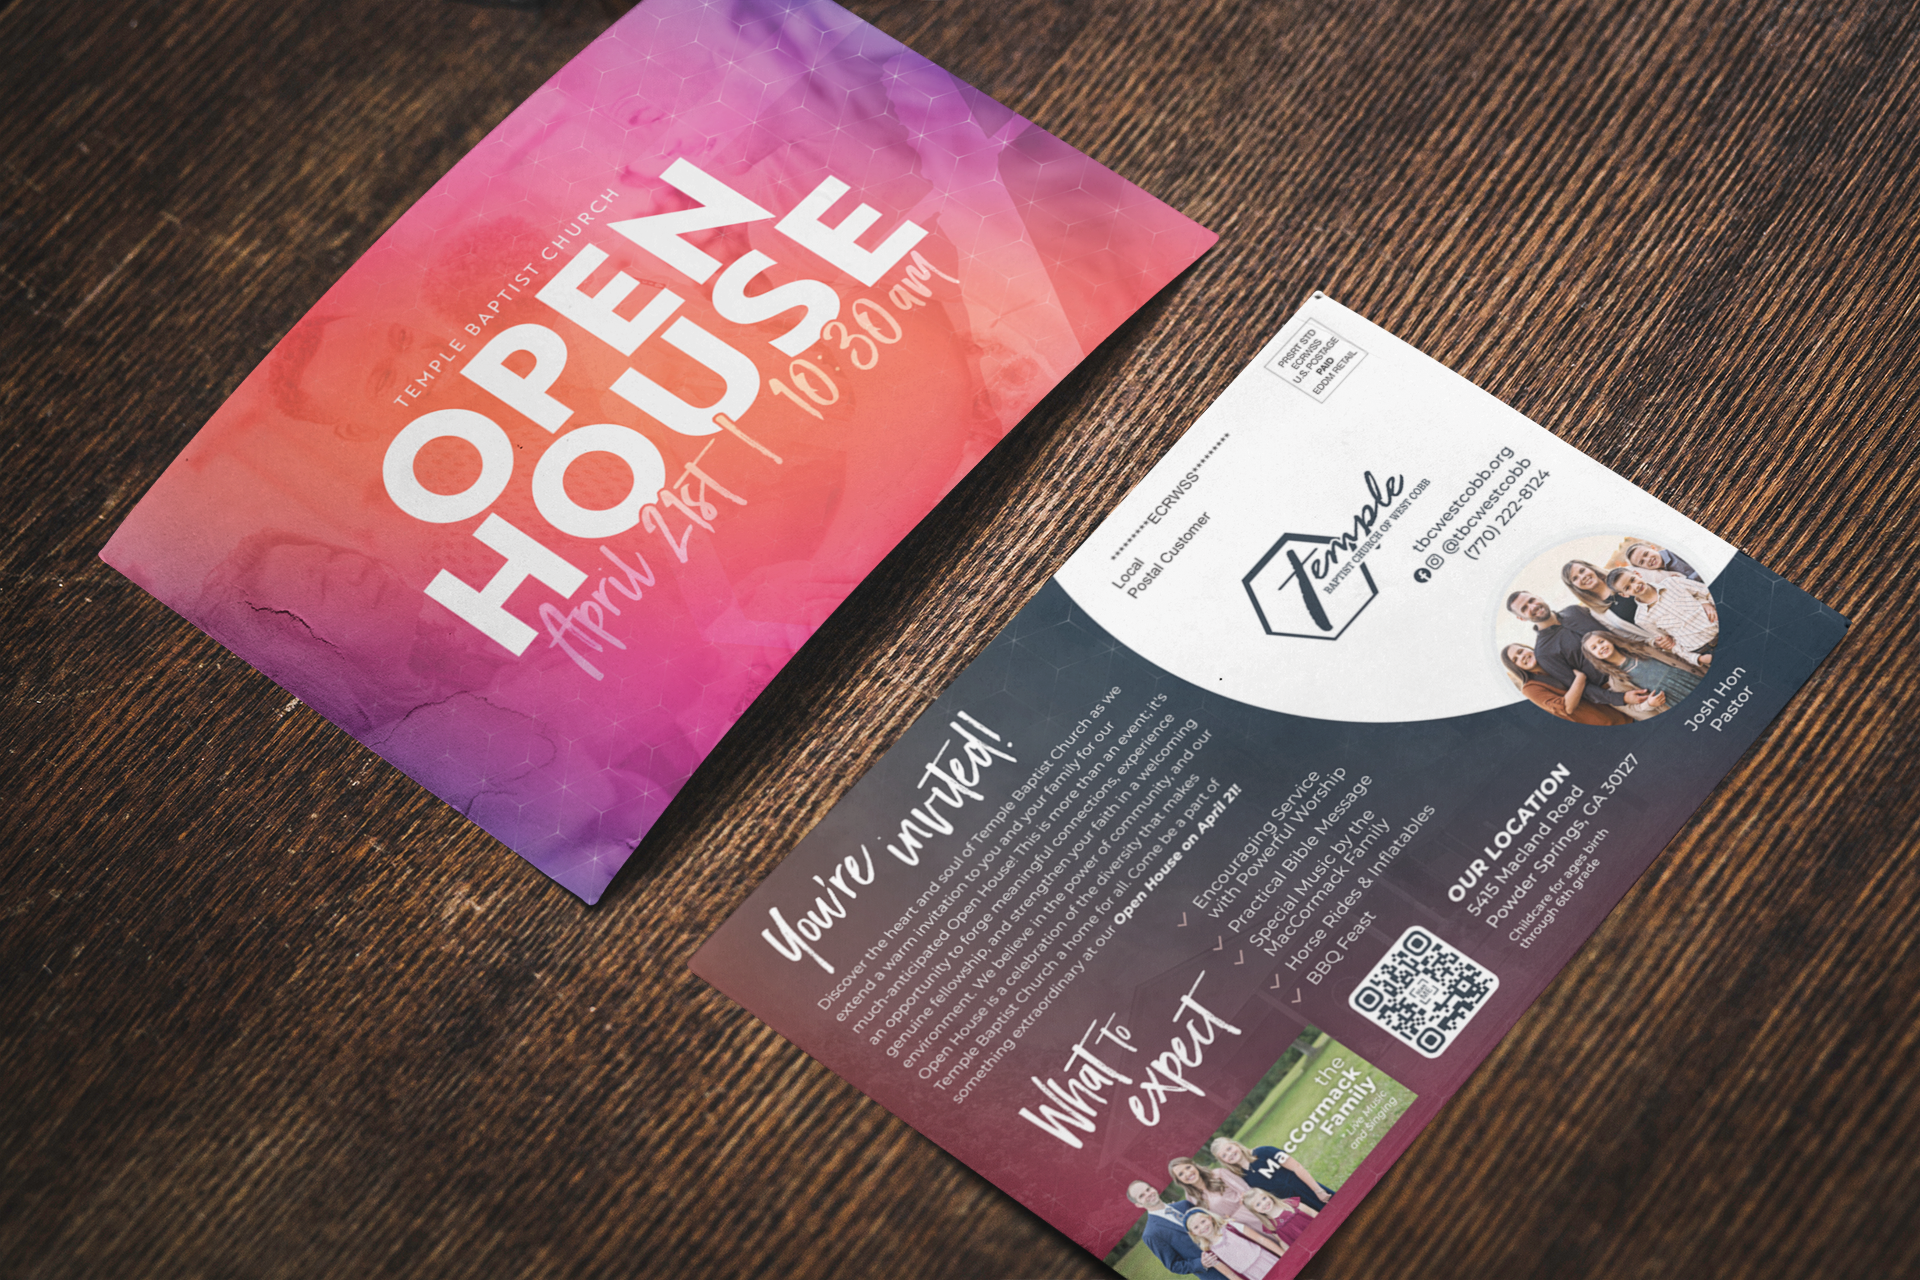 church printing, custom design, invite cards